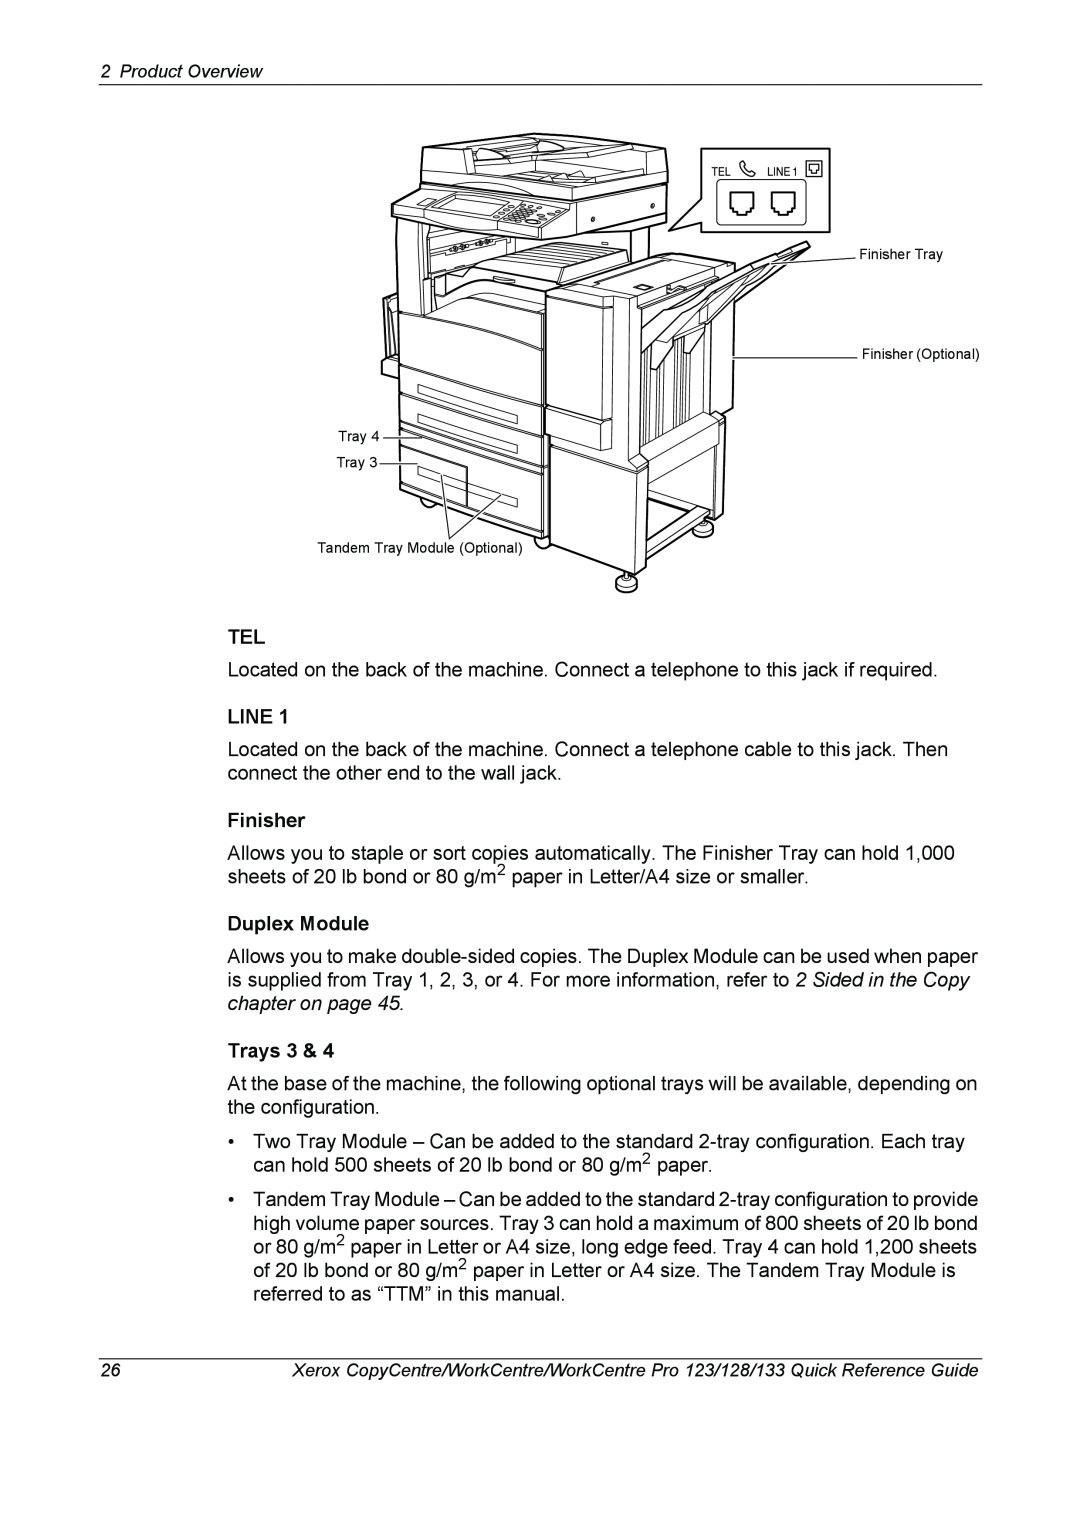 Xerox 604P18037 manual Line, Finisher, Duplex Module, Trays 3 